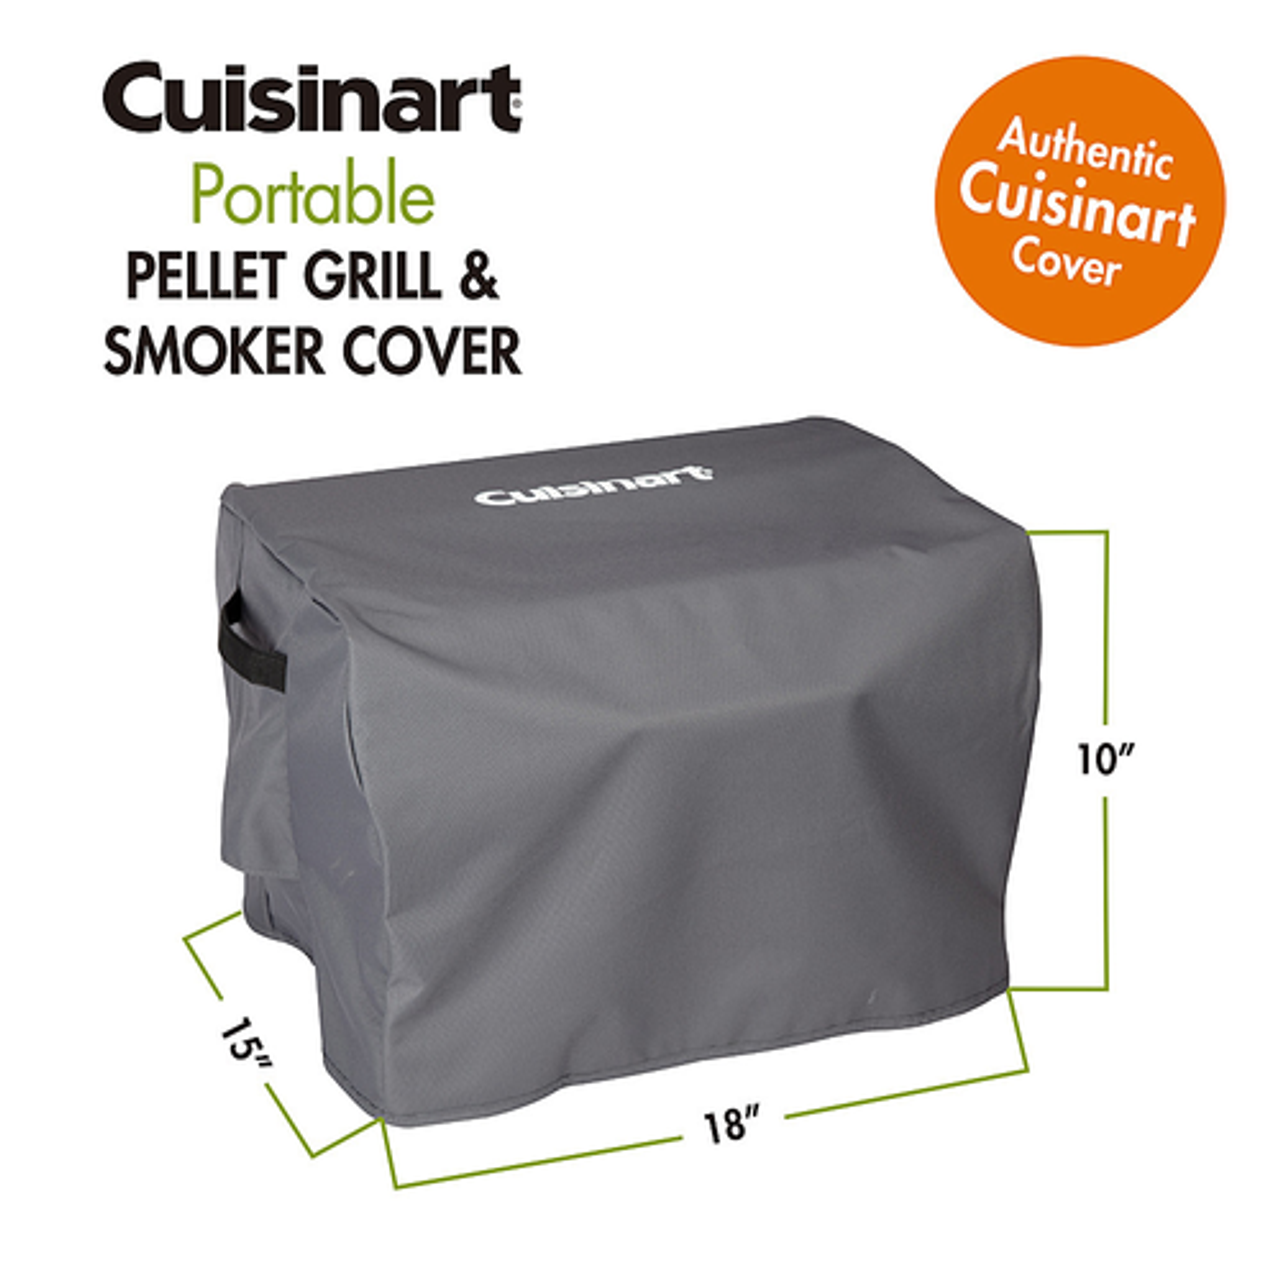 Cuisinart Portable Pellet Grill Cover - Gray